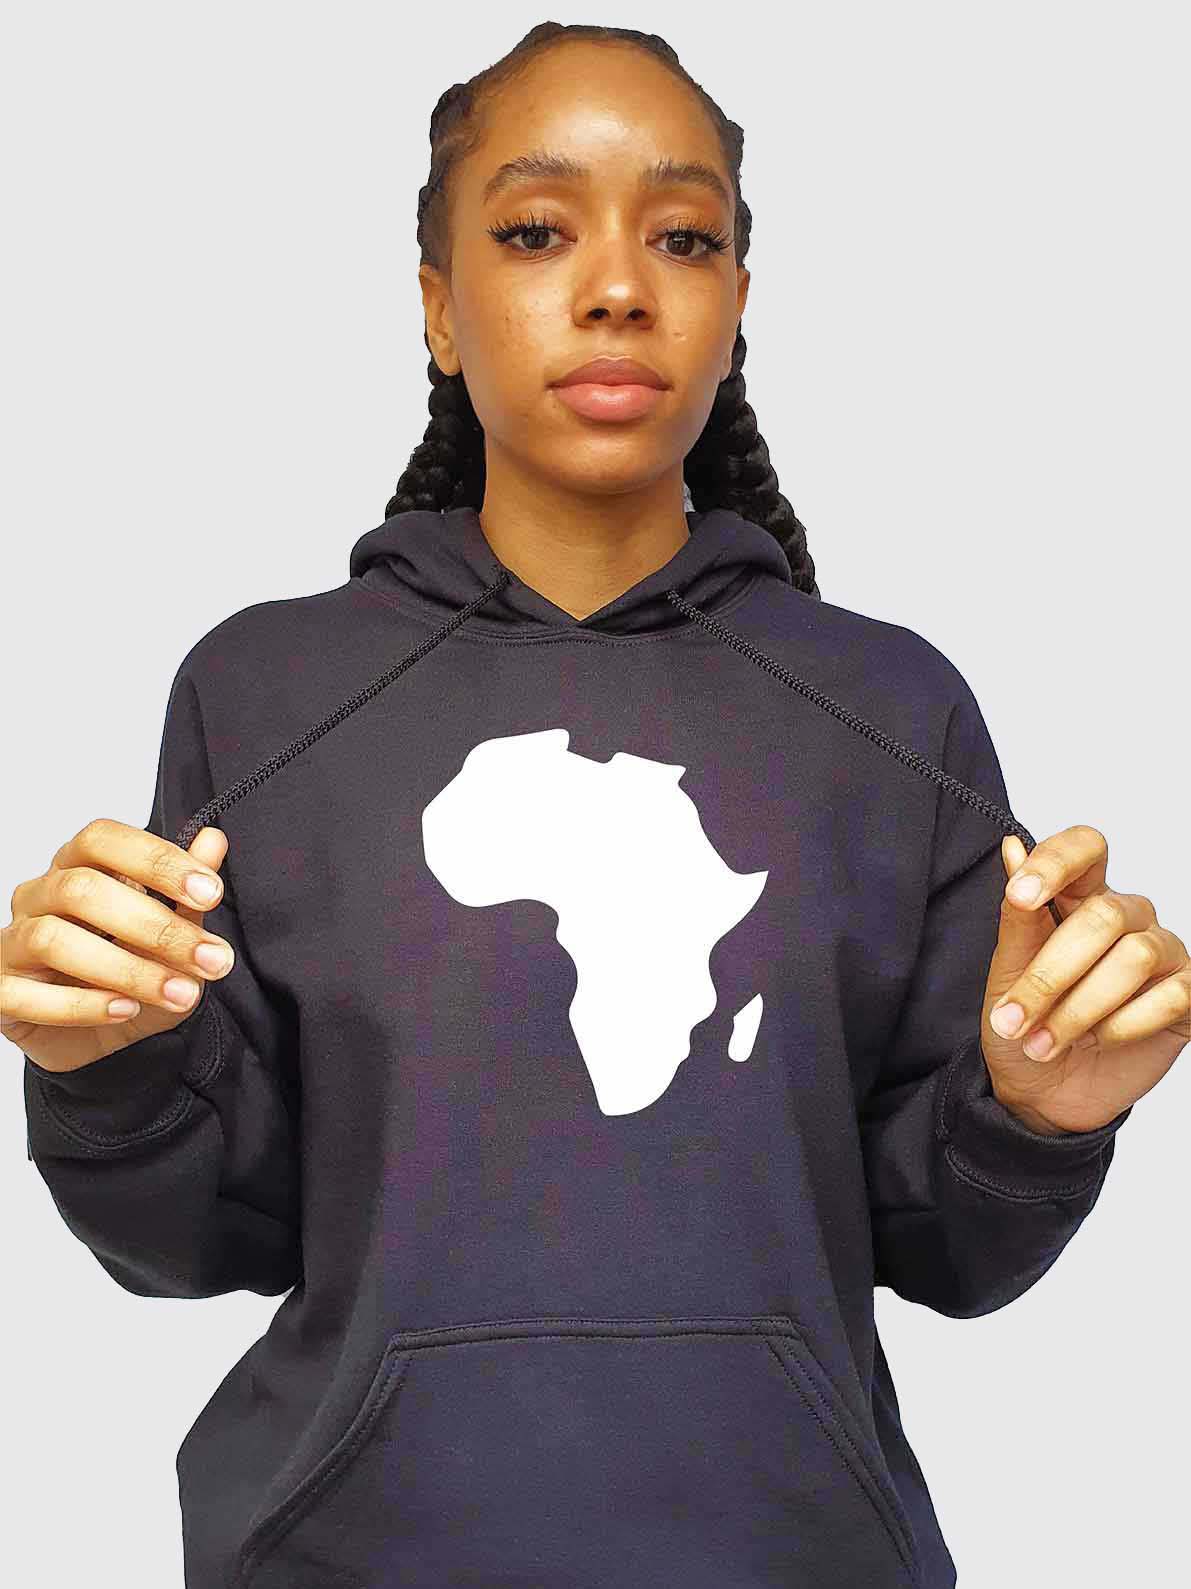 Women's Hoodies - Black Hood with White Vinyl Africa Map